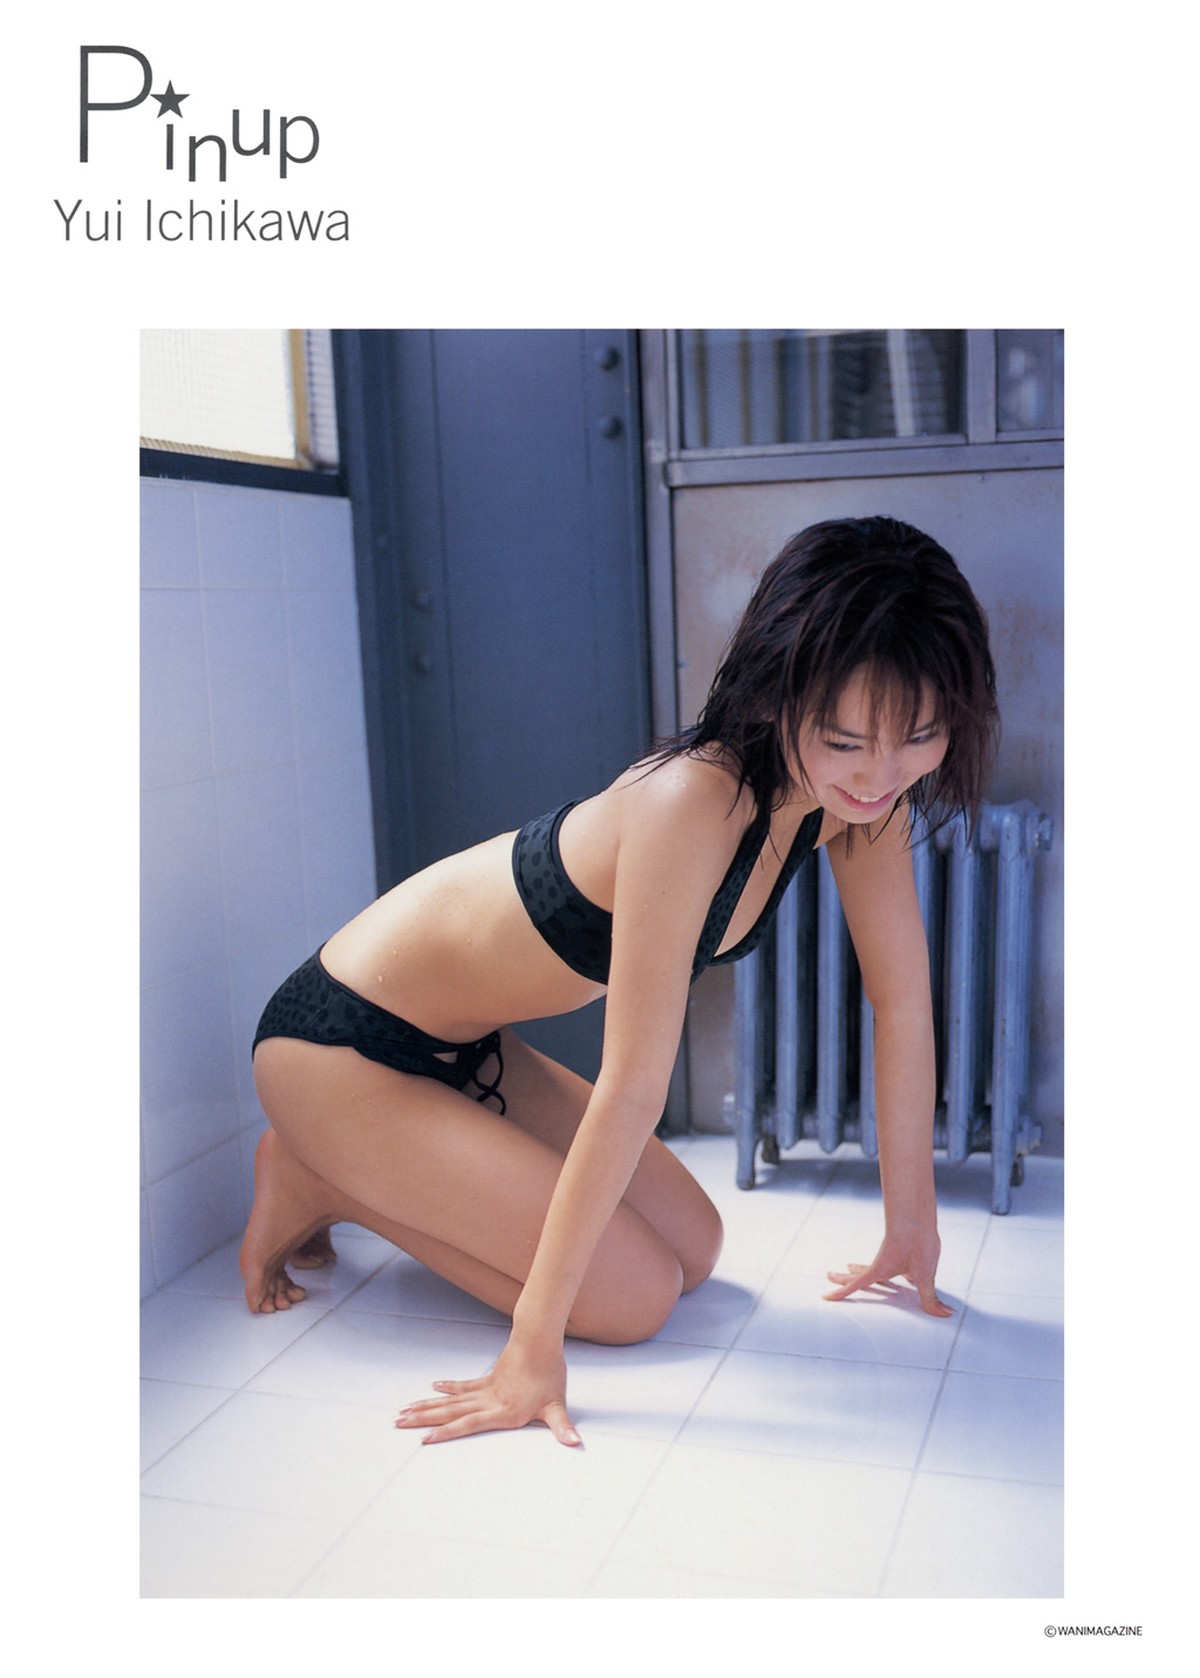 Photobook Yui Ichikawa 市川由衣 Pinup Poster 0031 1869064429.jpg